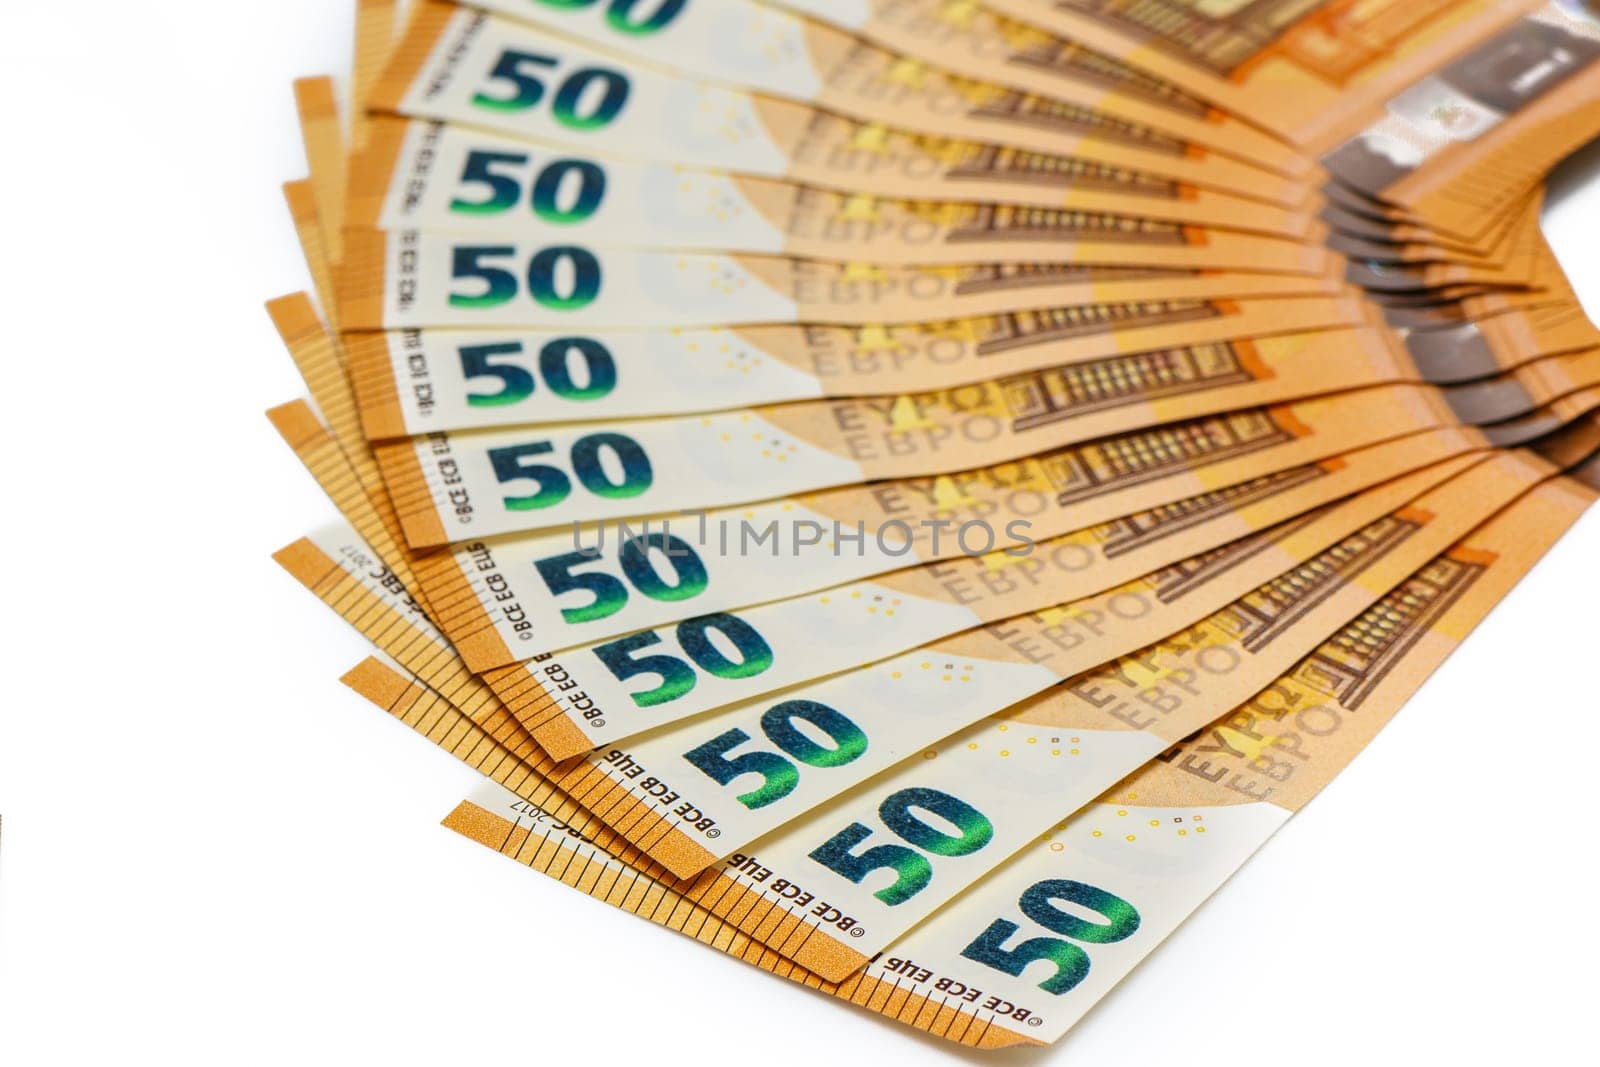 European money cash with 50 euros bills, top view 1 by Mixa74